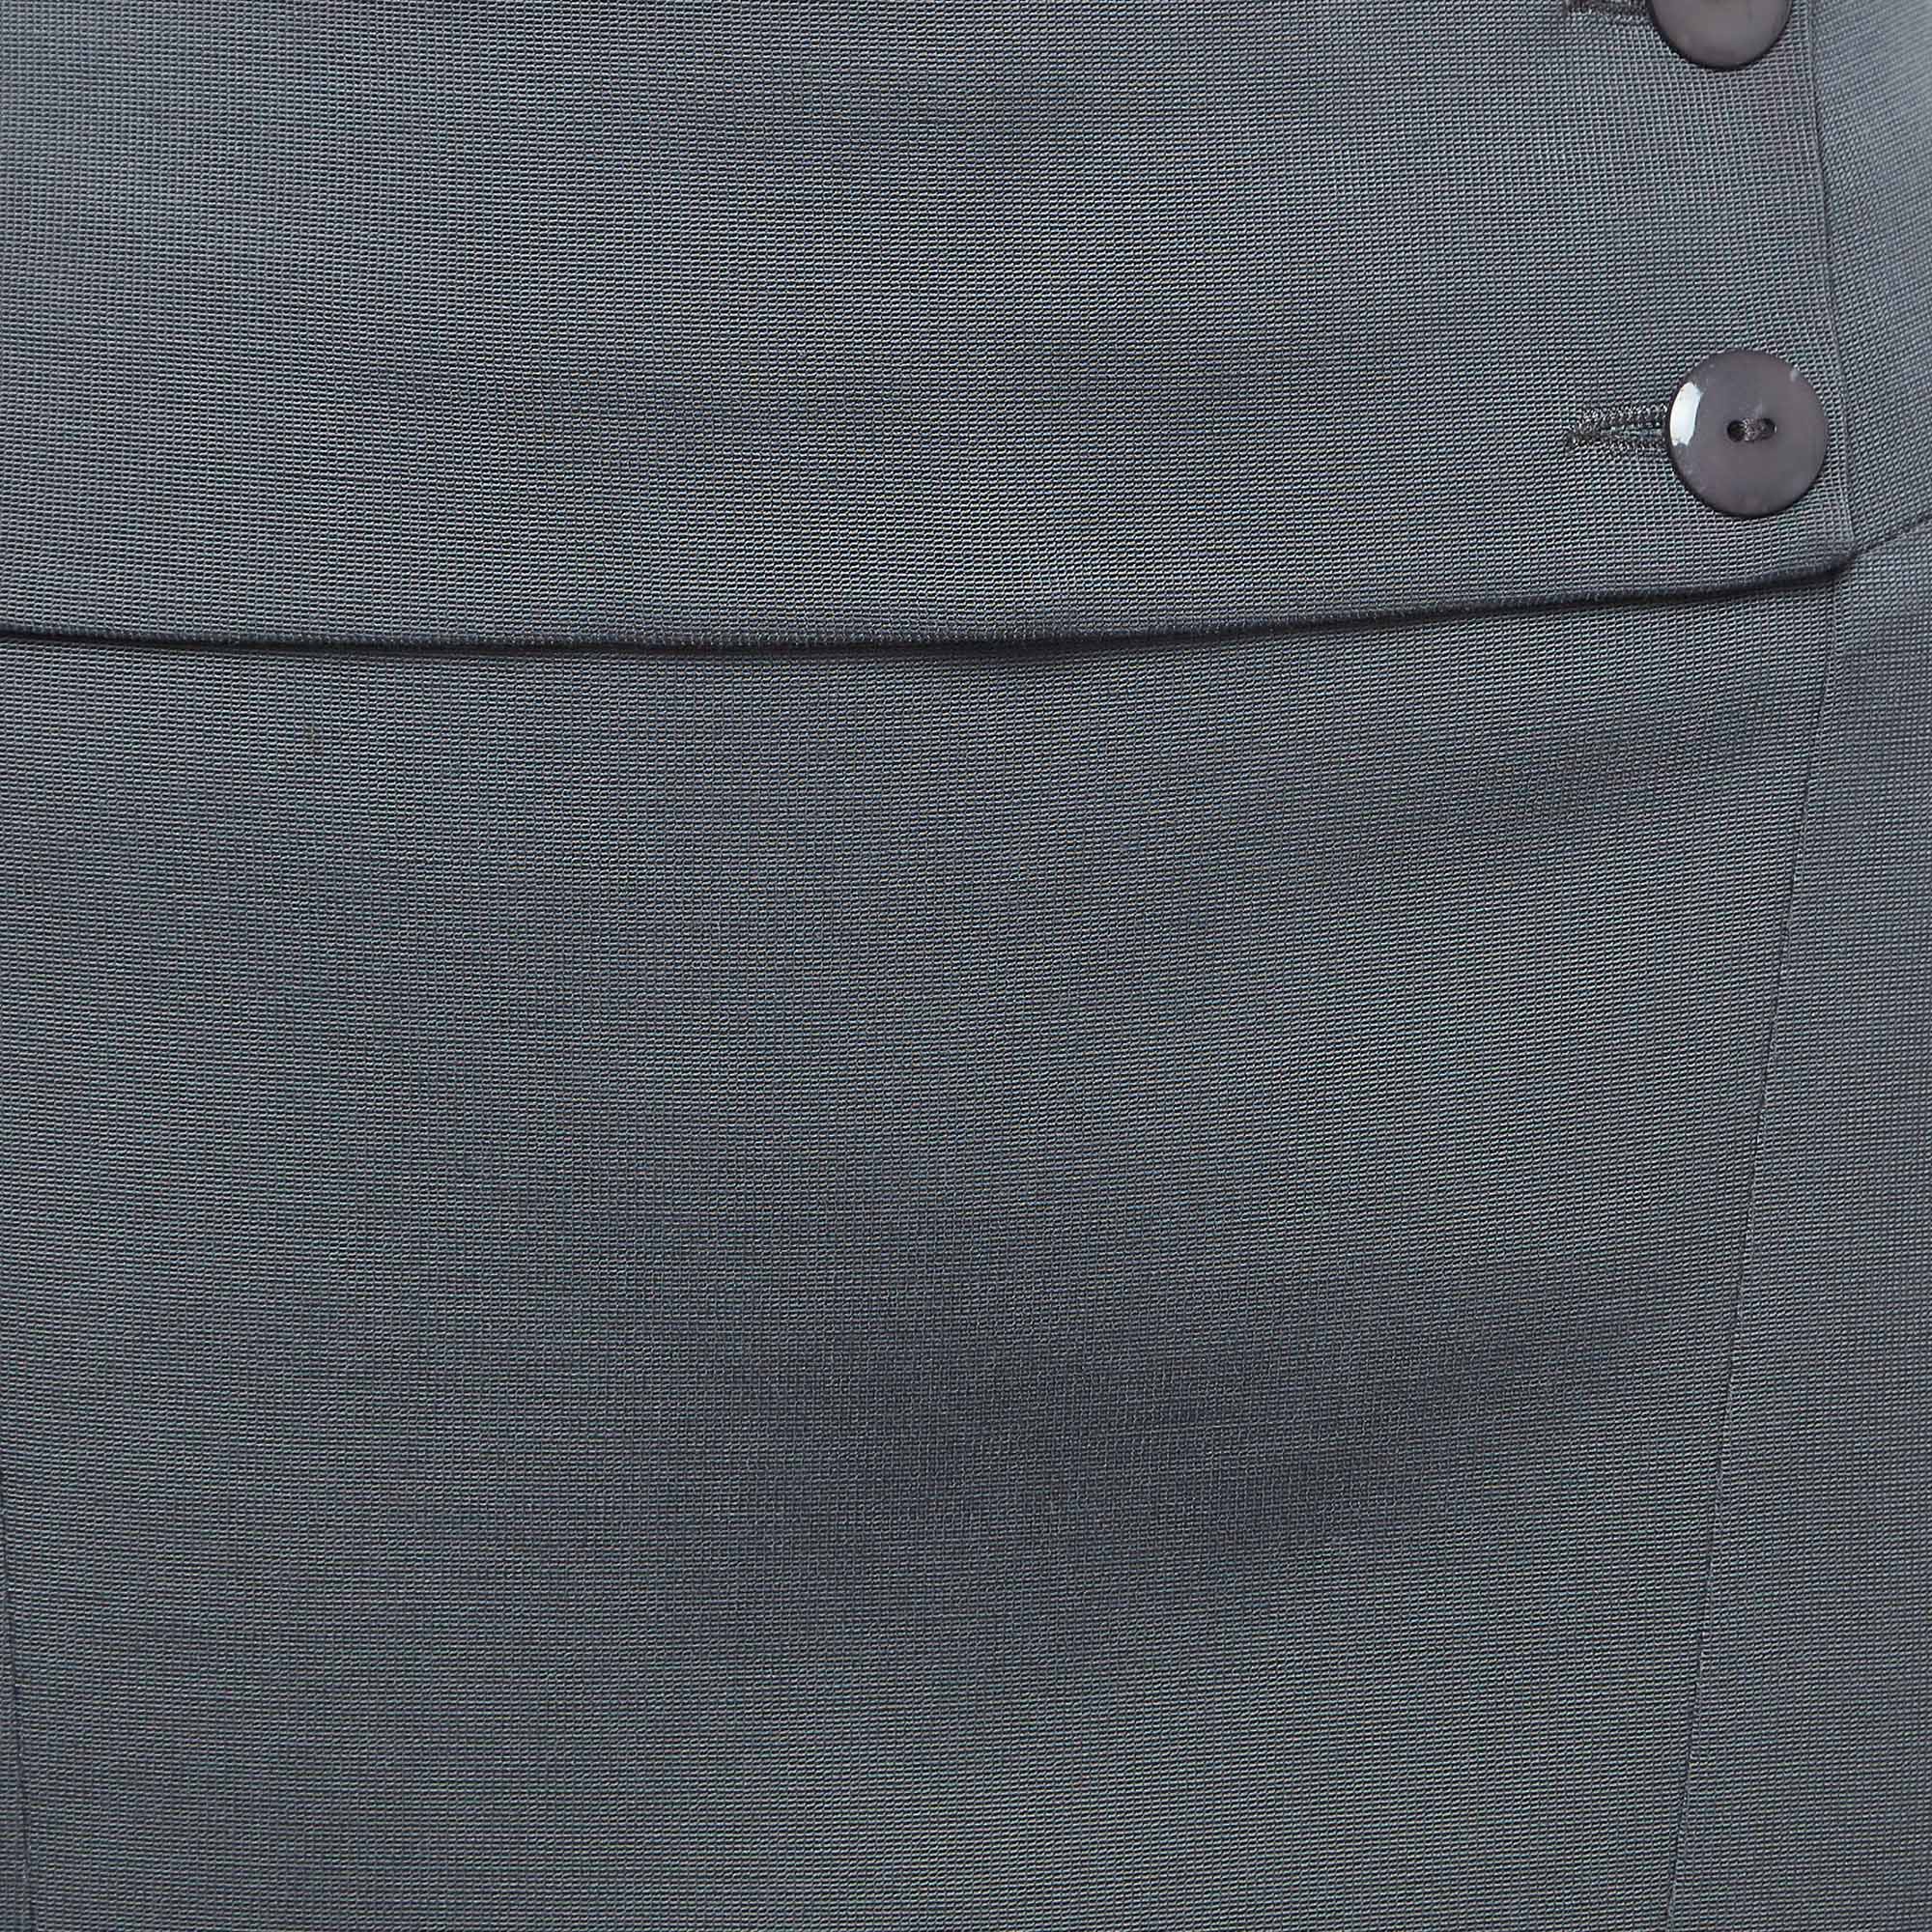 Emporio Armani Grey Crepe Blazer Skirt Suit M/L